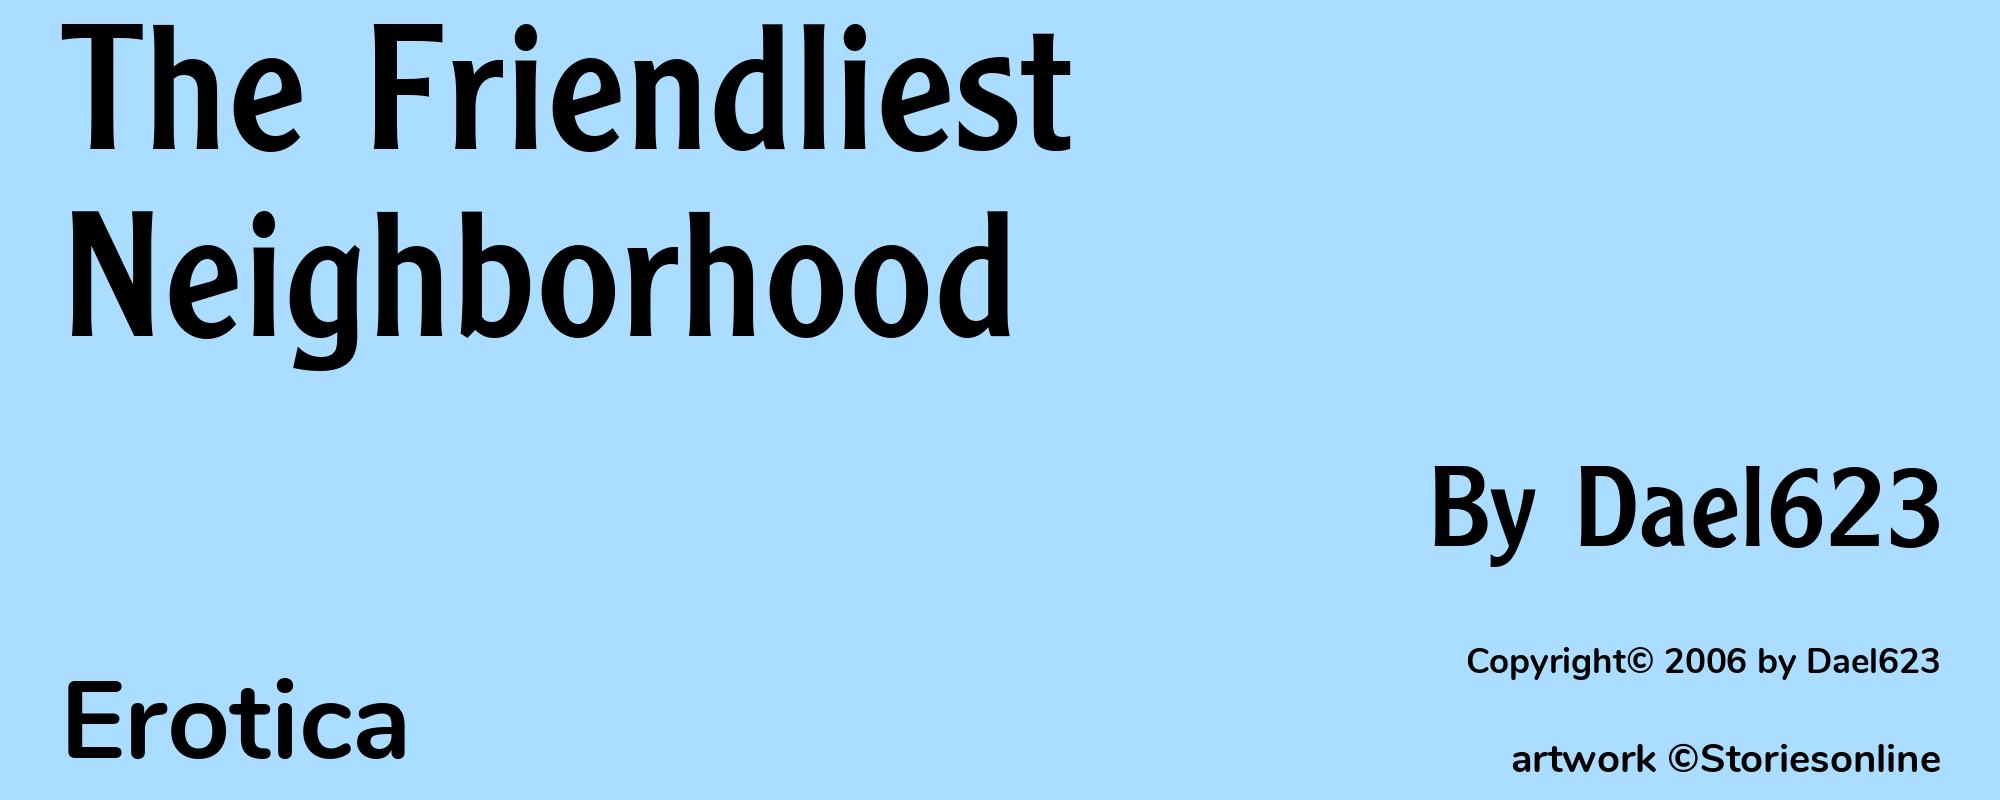 The Friendliest Neighborhood - Cover